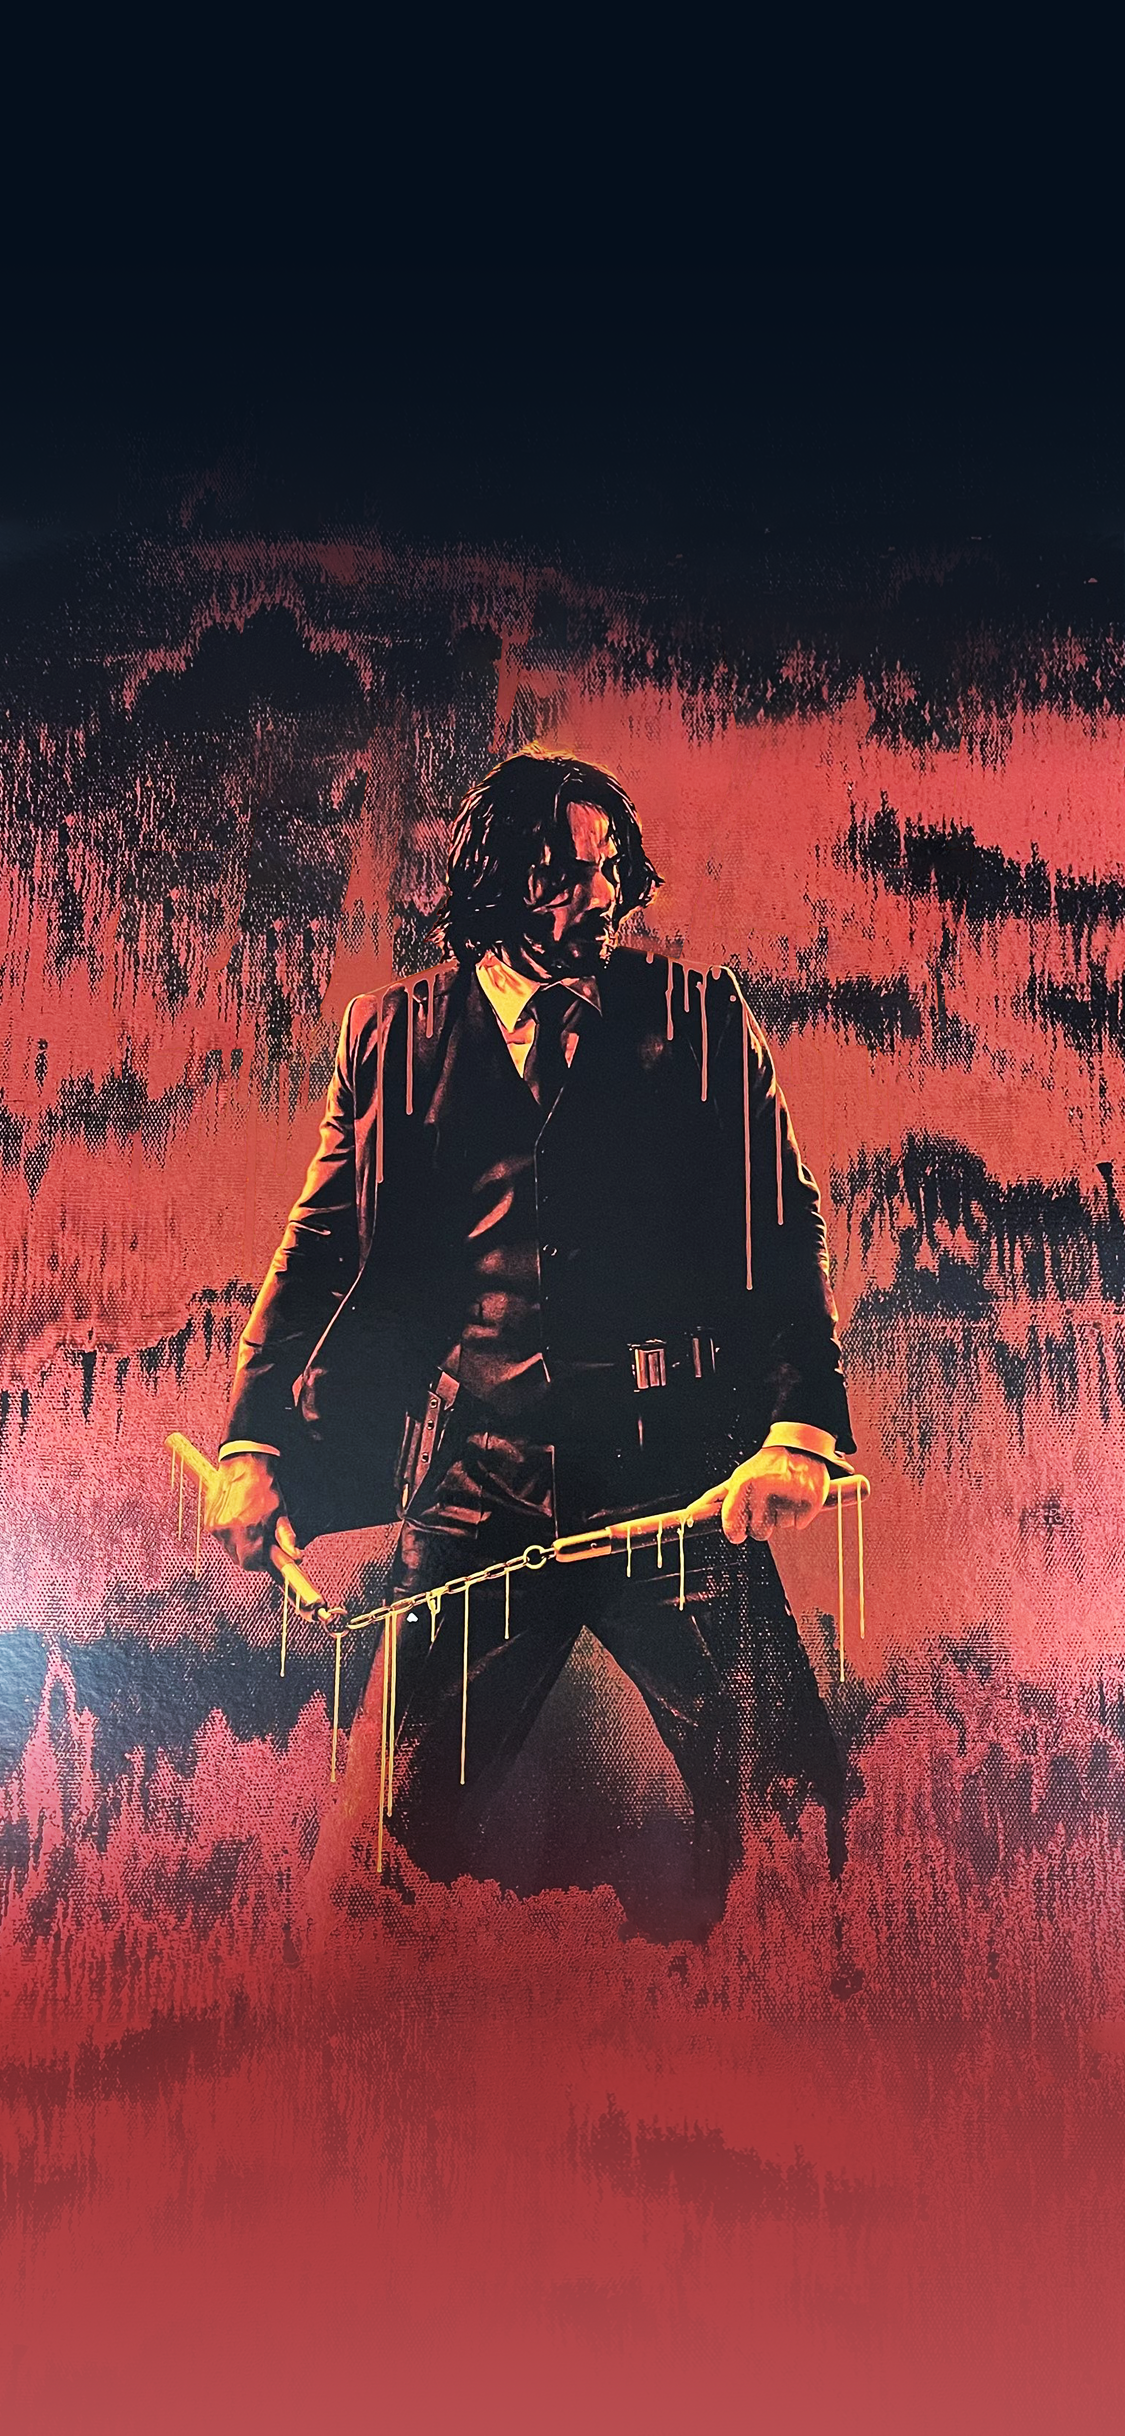 Poster Of John Wick 3 Wallpapers